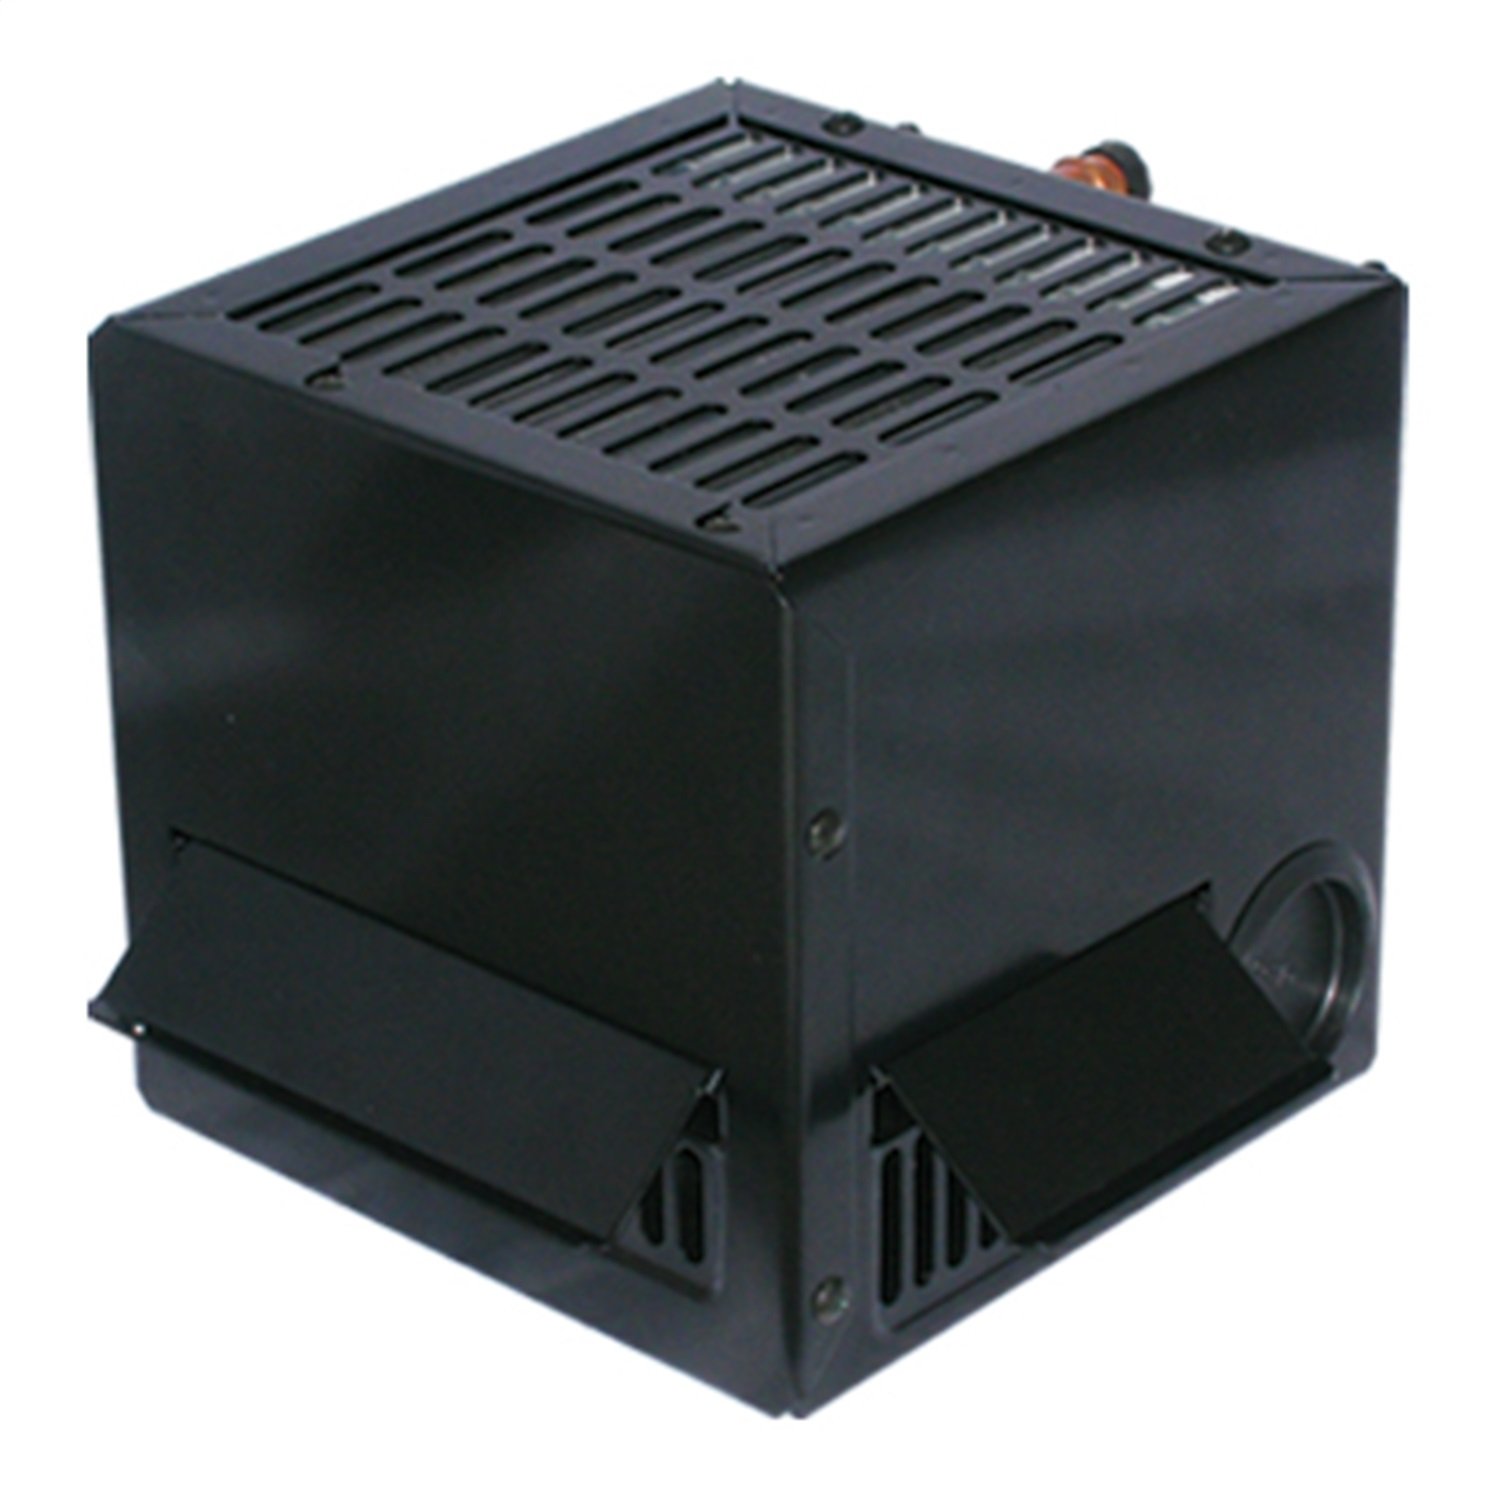 The Heat 5000 Hydronic Heater